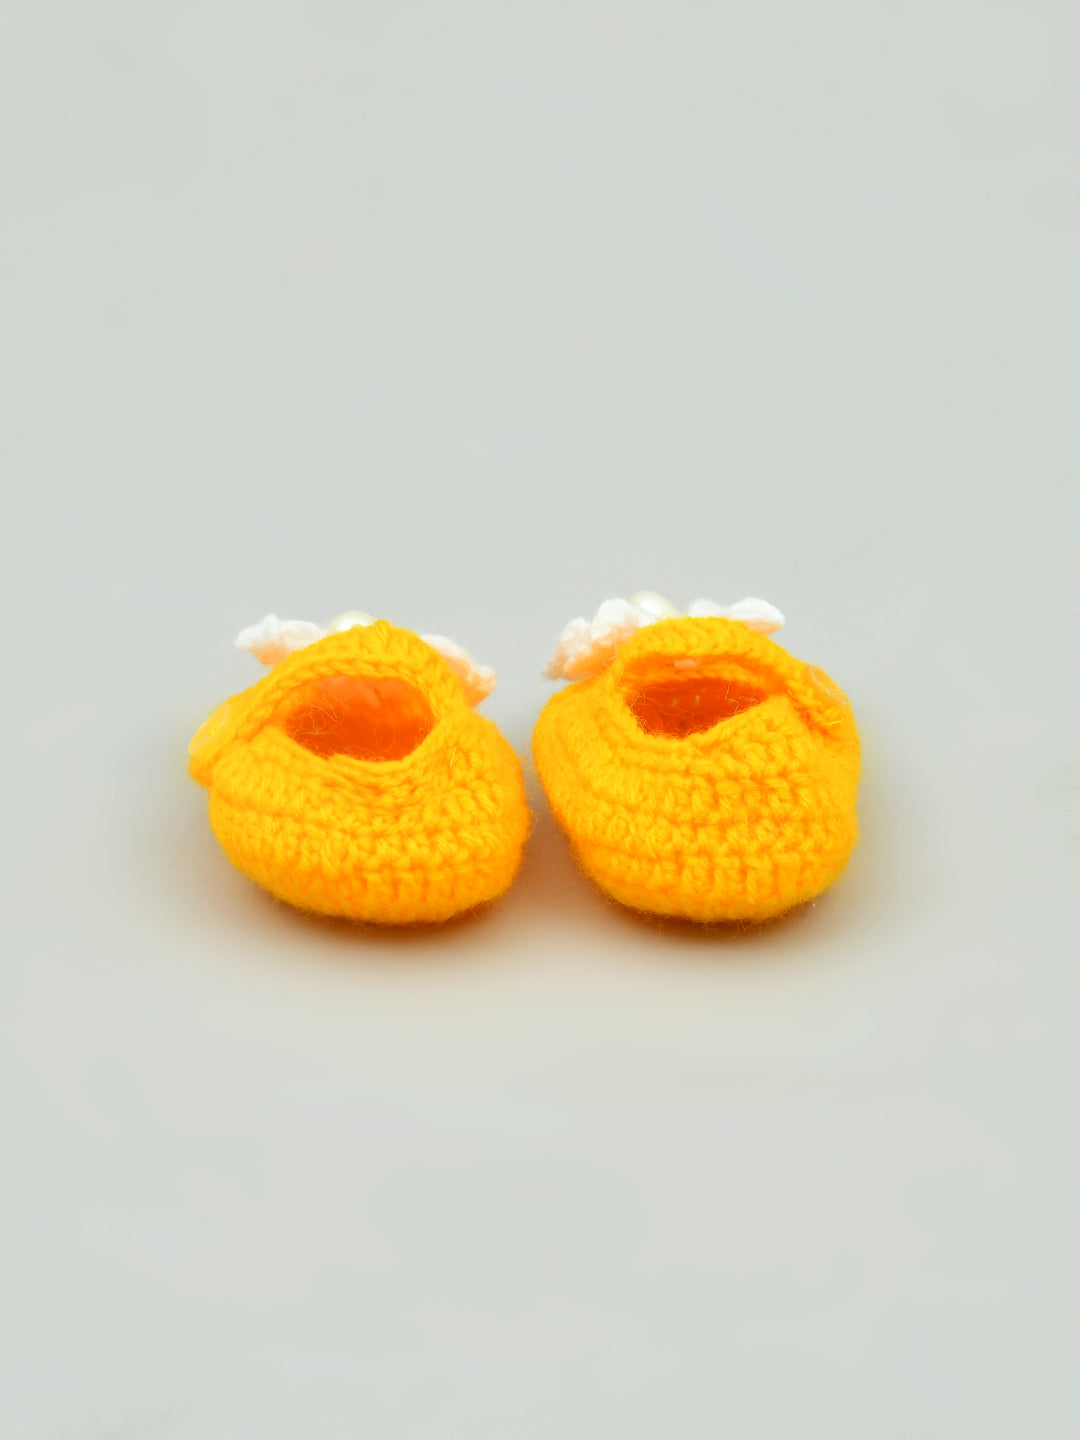 Yellow & White Flowered Crochet Baby Booties for Girls